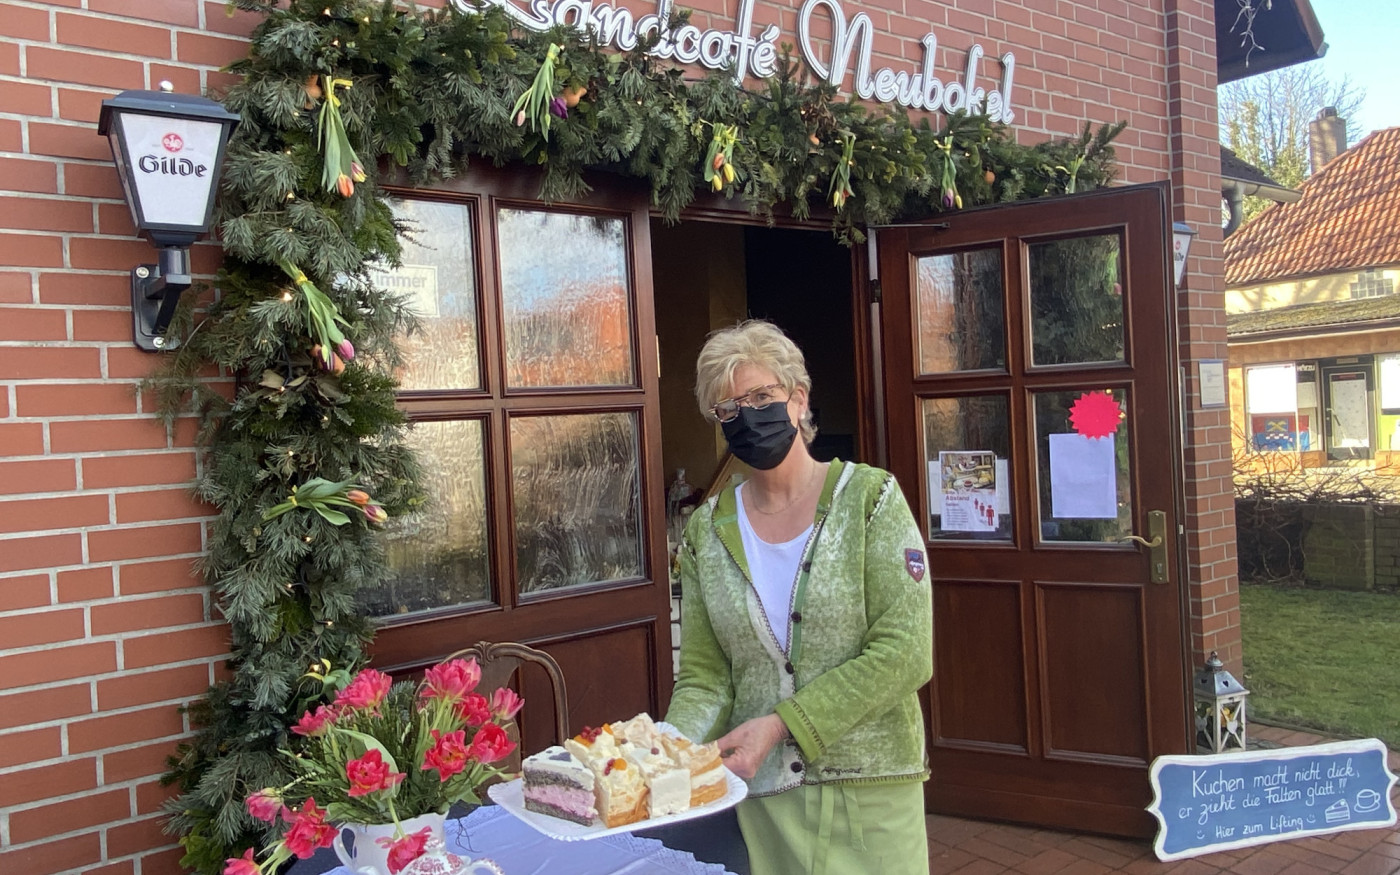 Süße Torten helfen gegen den Corona-Frust: Andrea Kyszkiewicz bietet ihre Kreationen jeden Sonntag im Landcafé Neubokel an